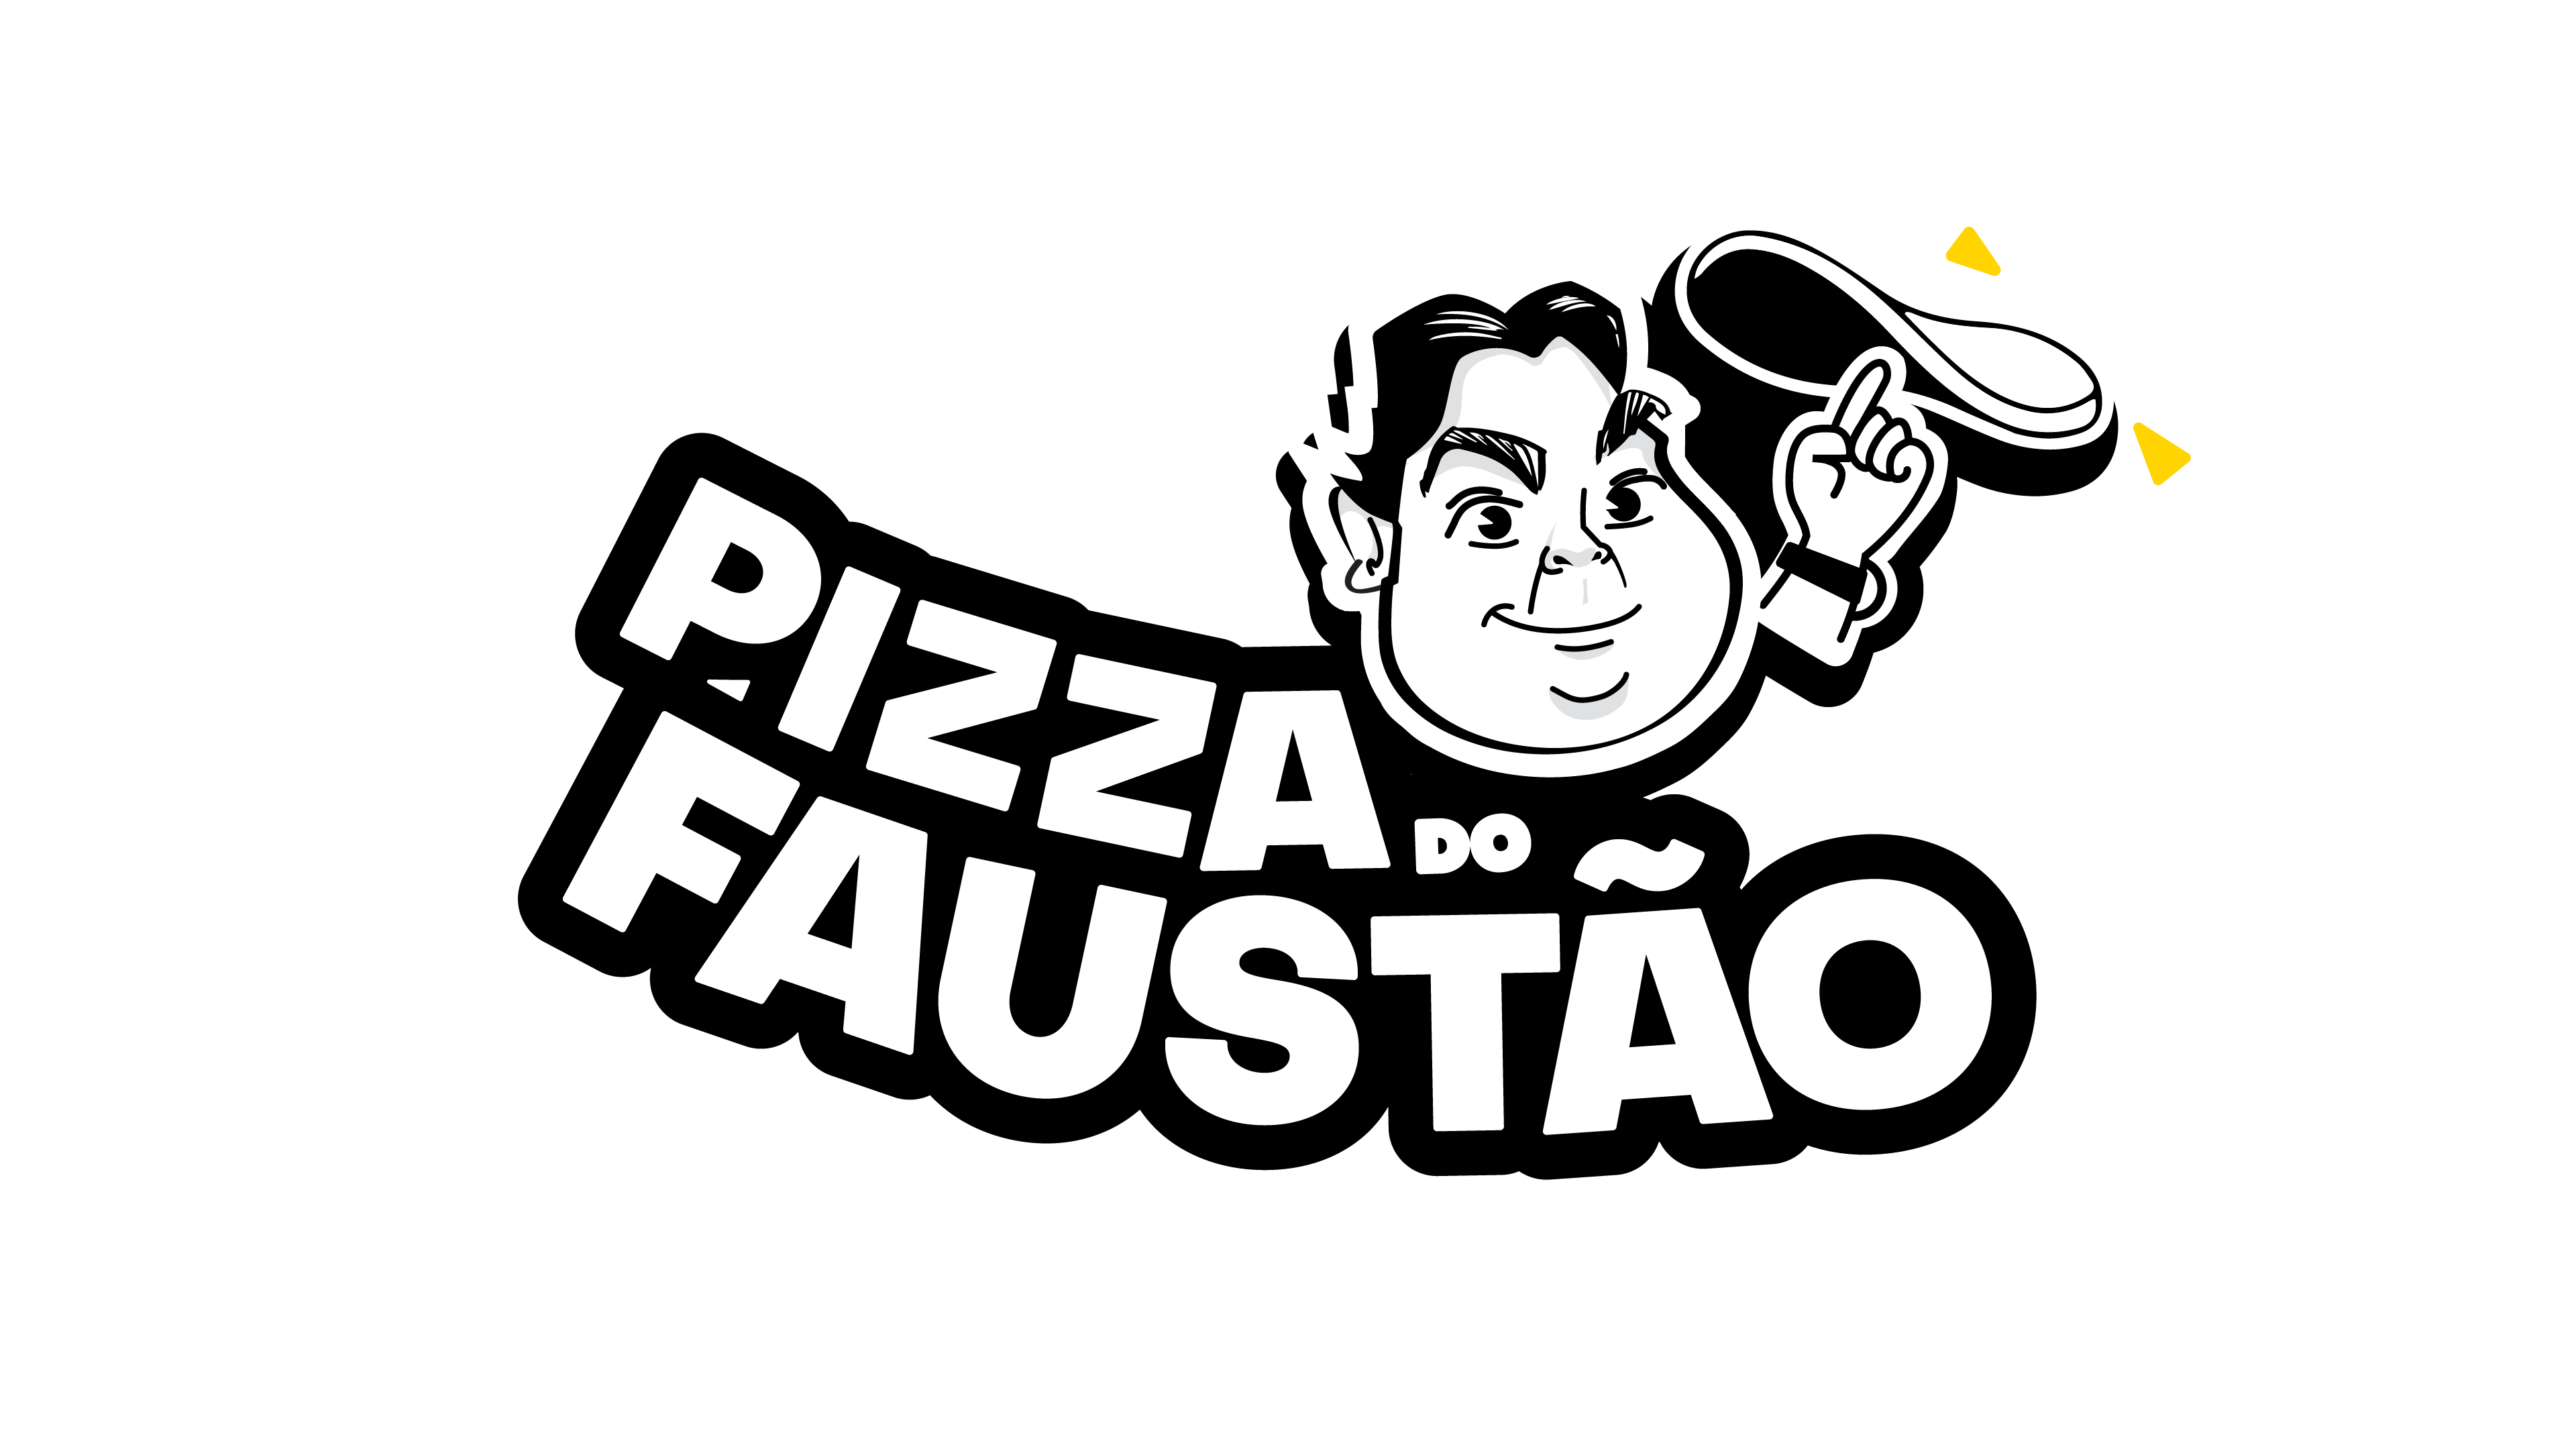 Pizza do Faustão - Gastrovia Turismo e Gastronomia